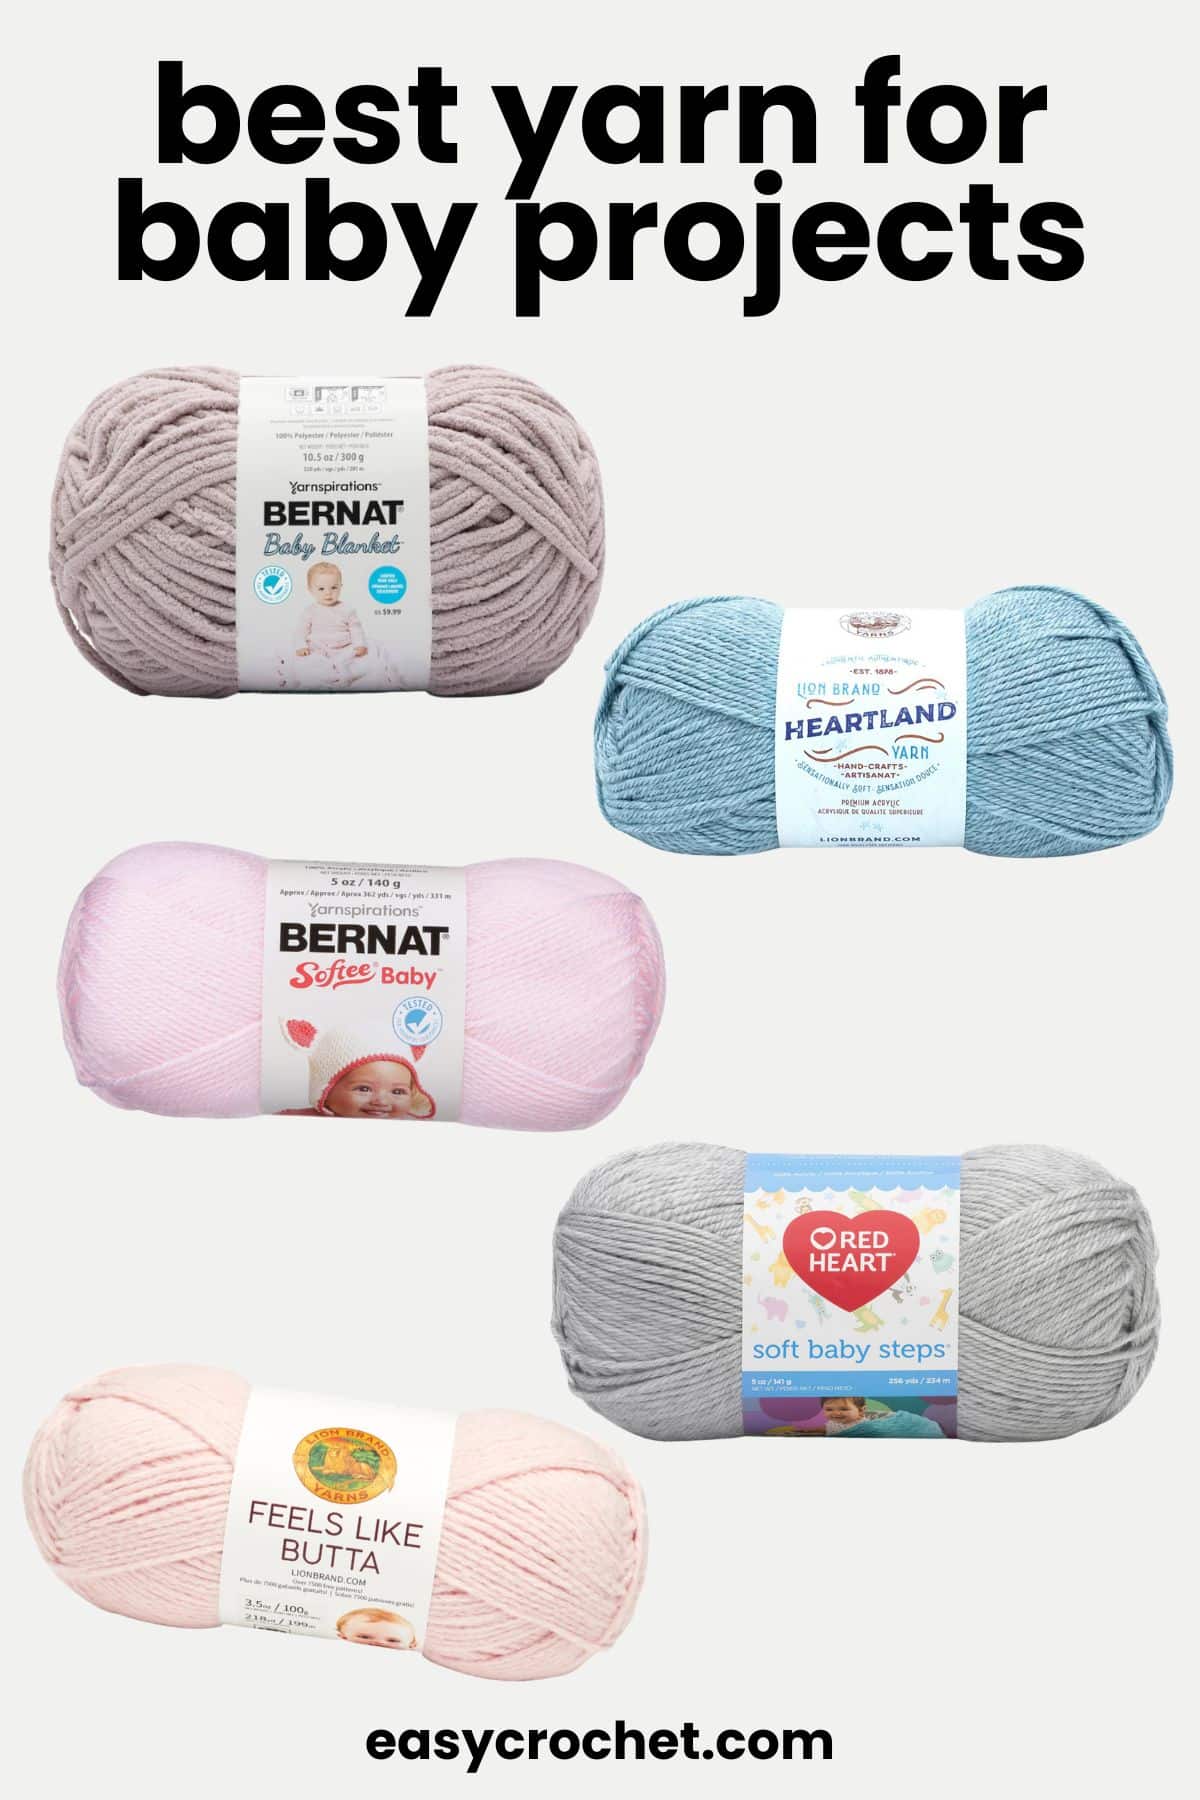 Bernat Softee Baby Cotton Soft Plum Yarn - 3 Pack of 120g/4.25oz